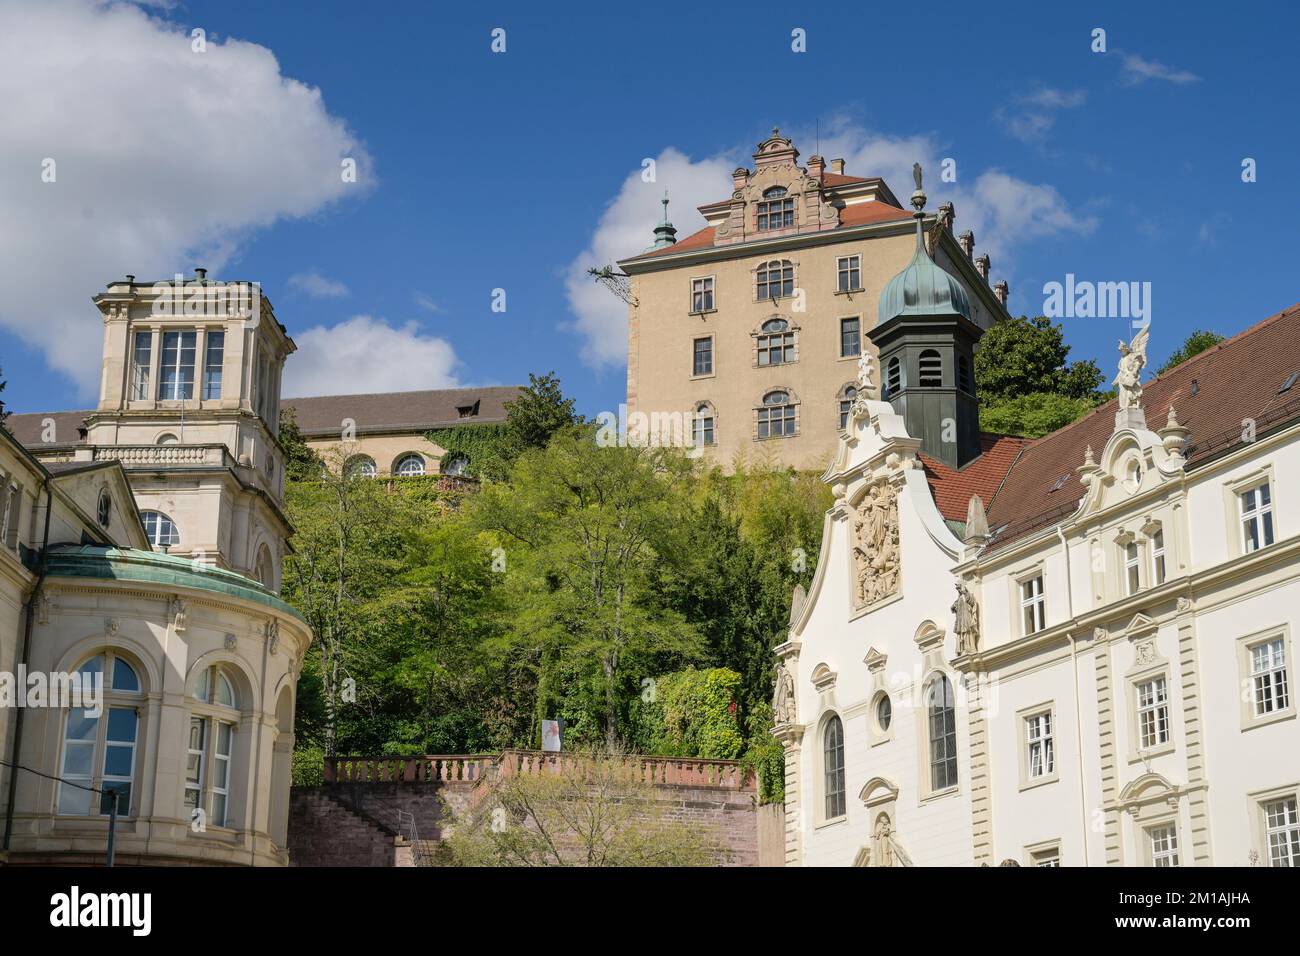 Neues Schloss, Baden-Baden, Baden-Württemberg, Deutschland Foto Stock